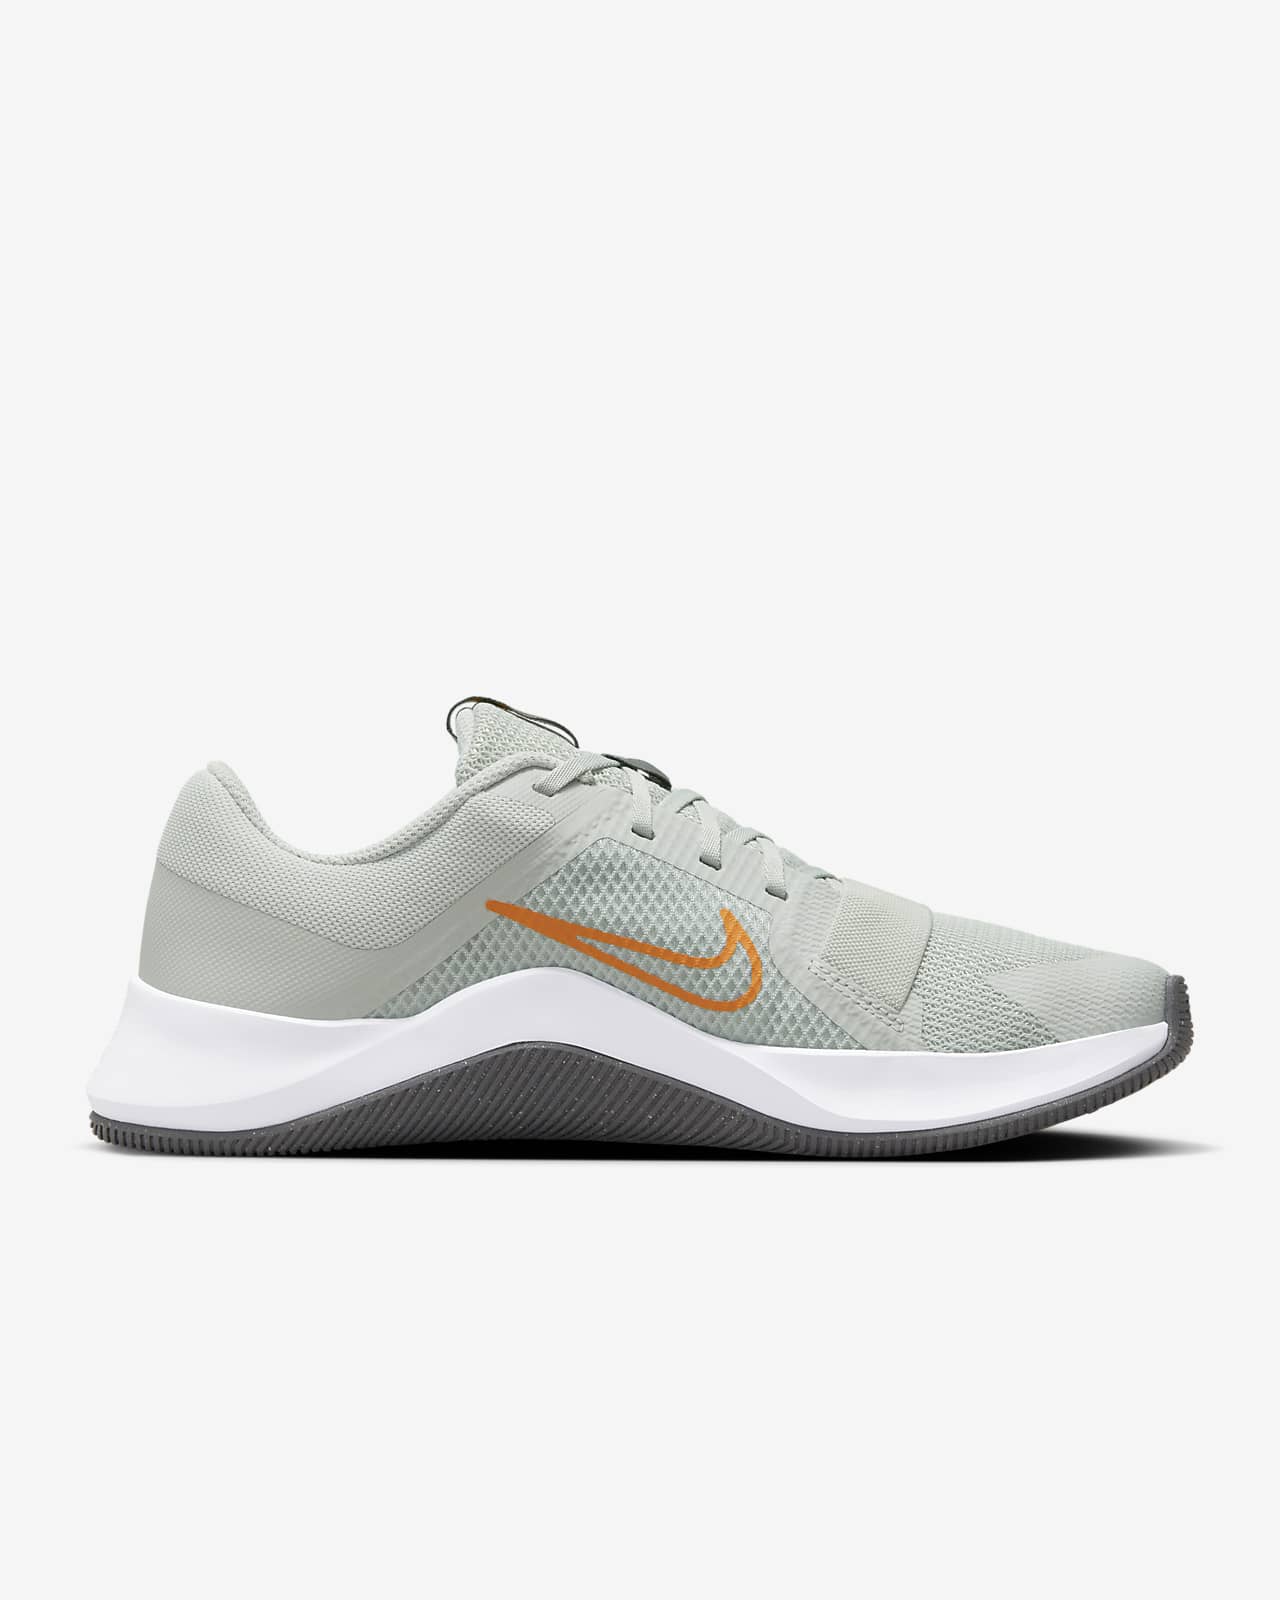 Nike MC Trainer 2 Sneakers in Silver